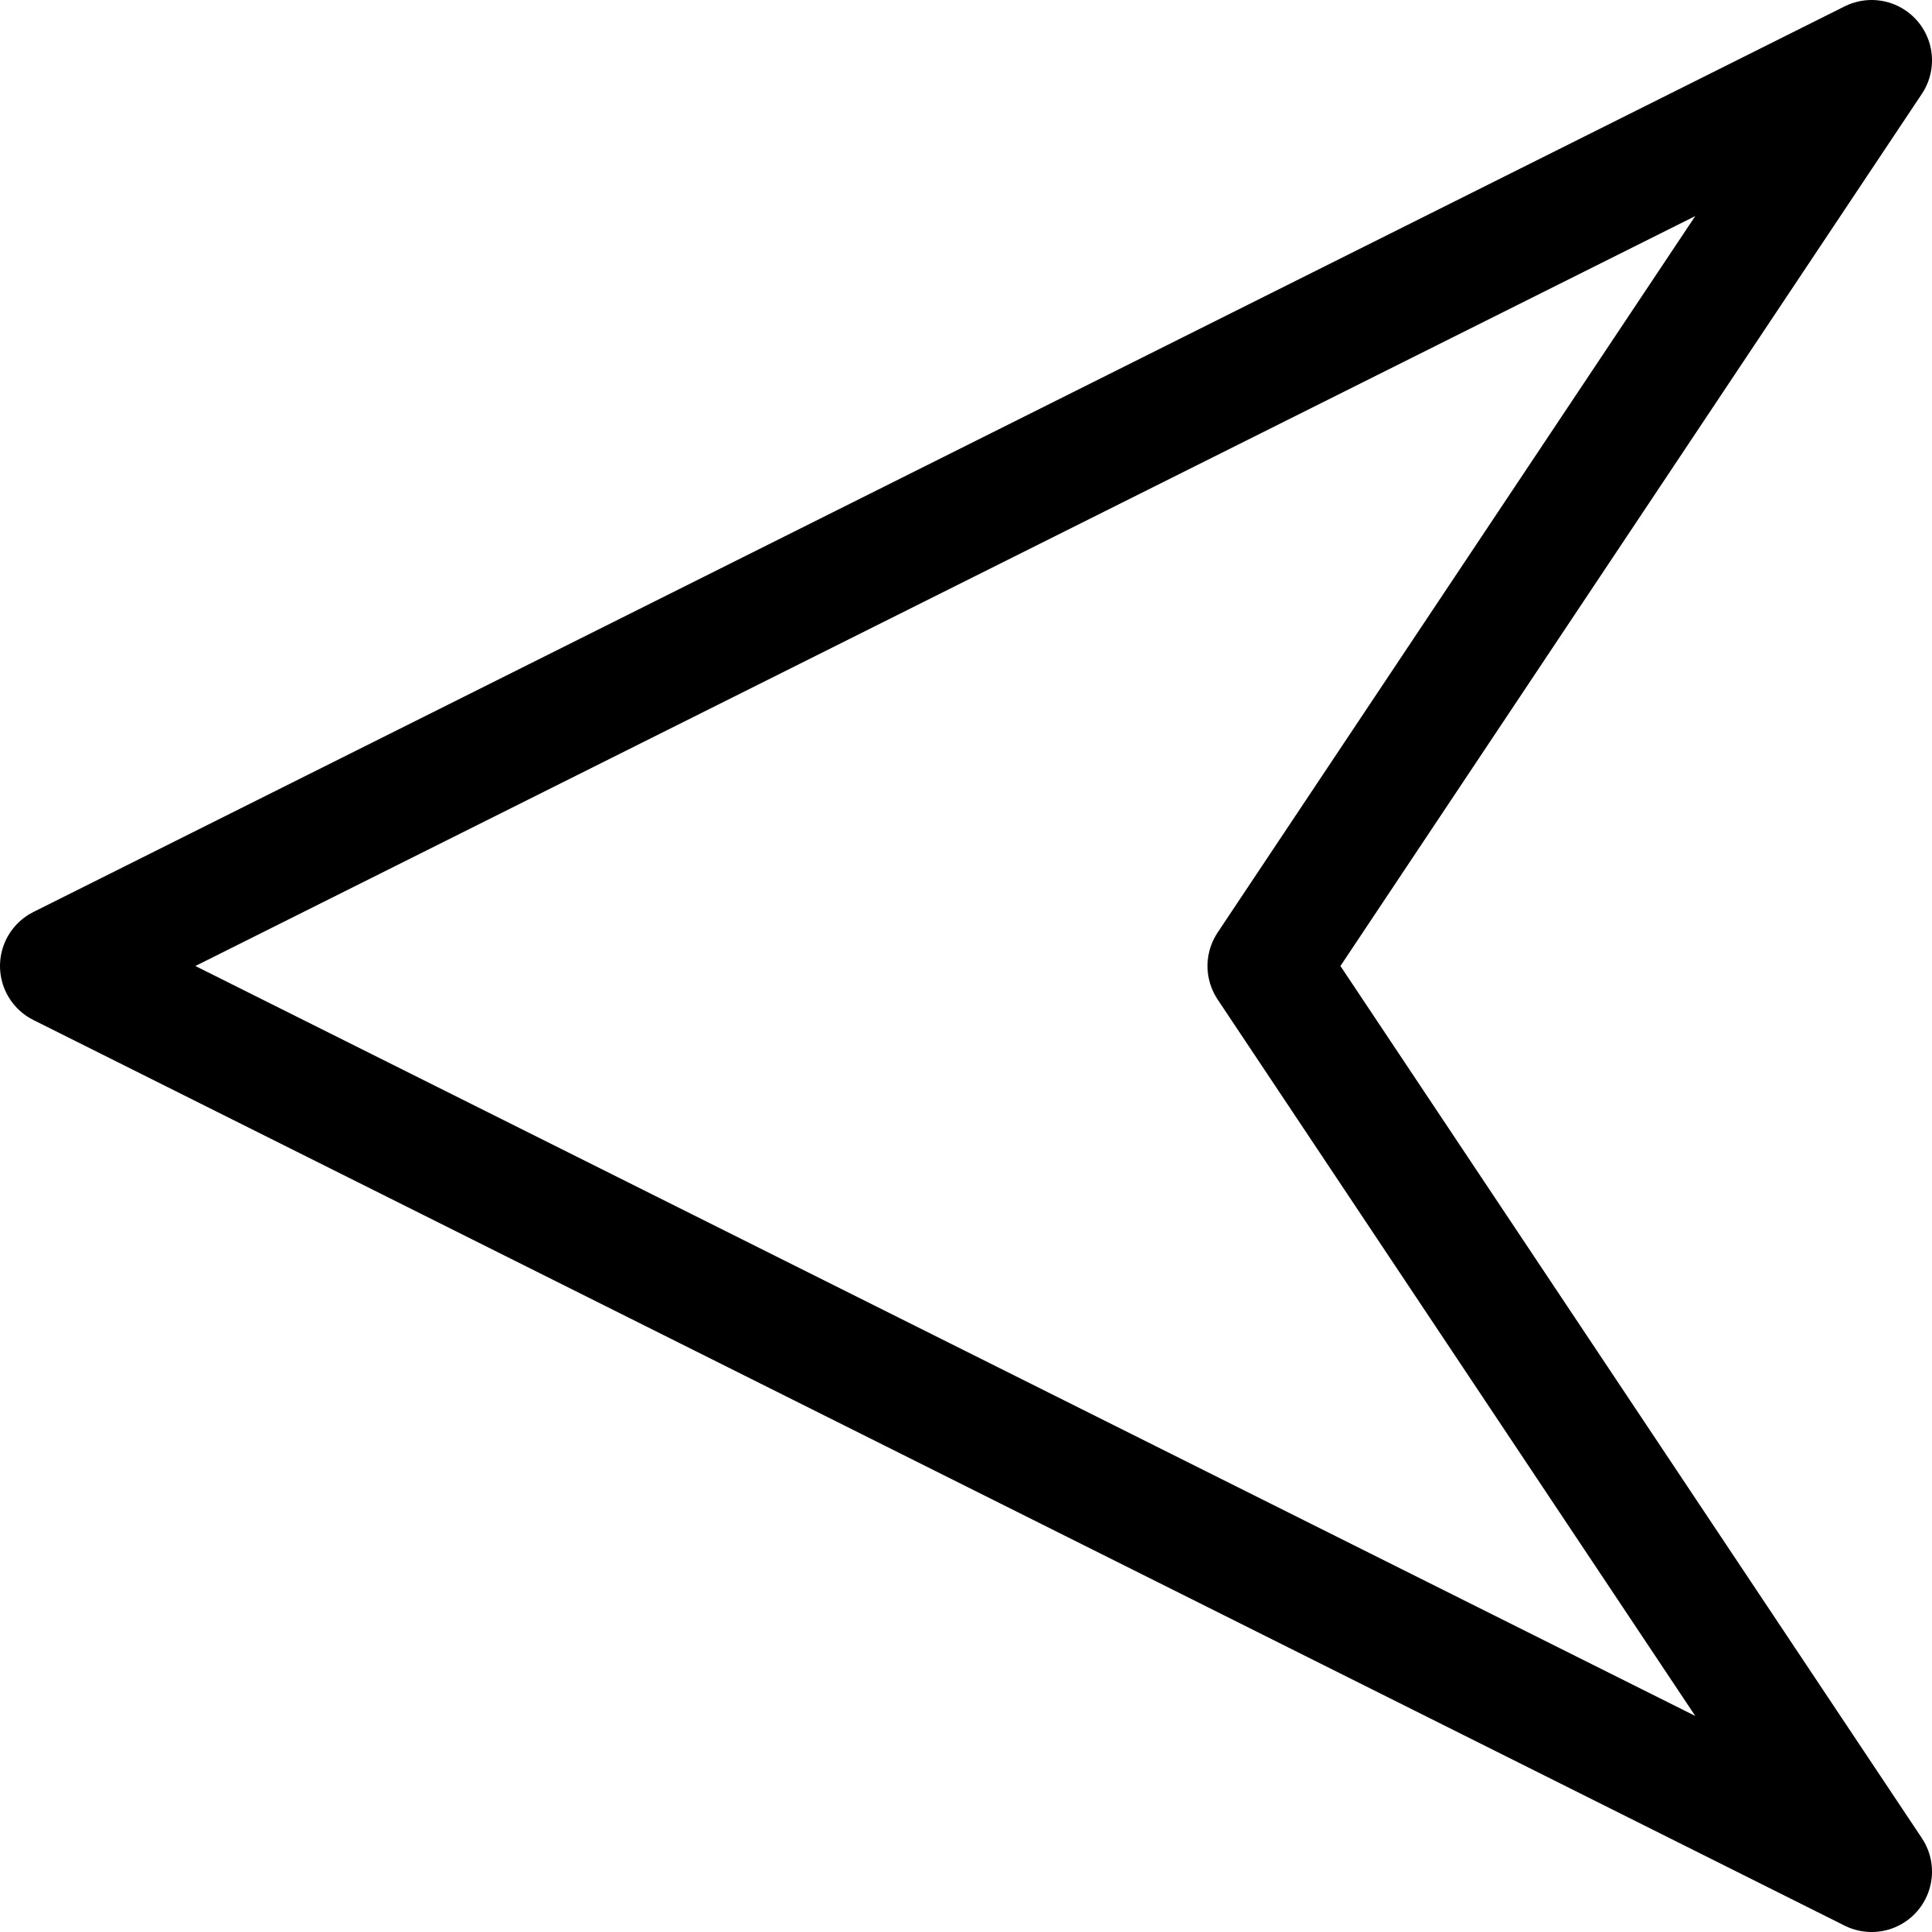 Triangle Arrow Left icons